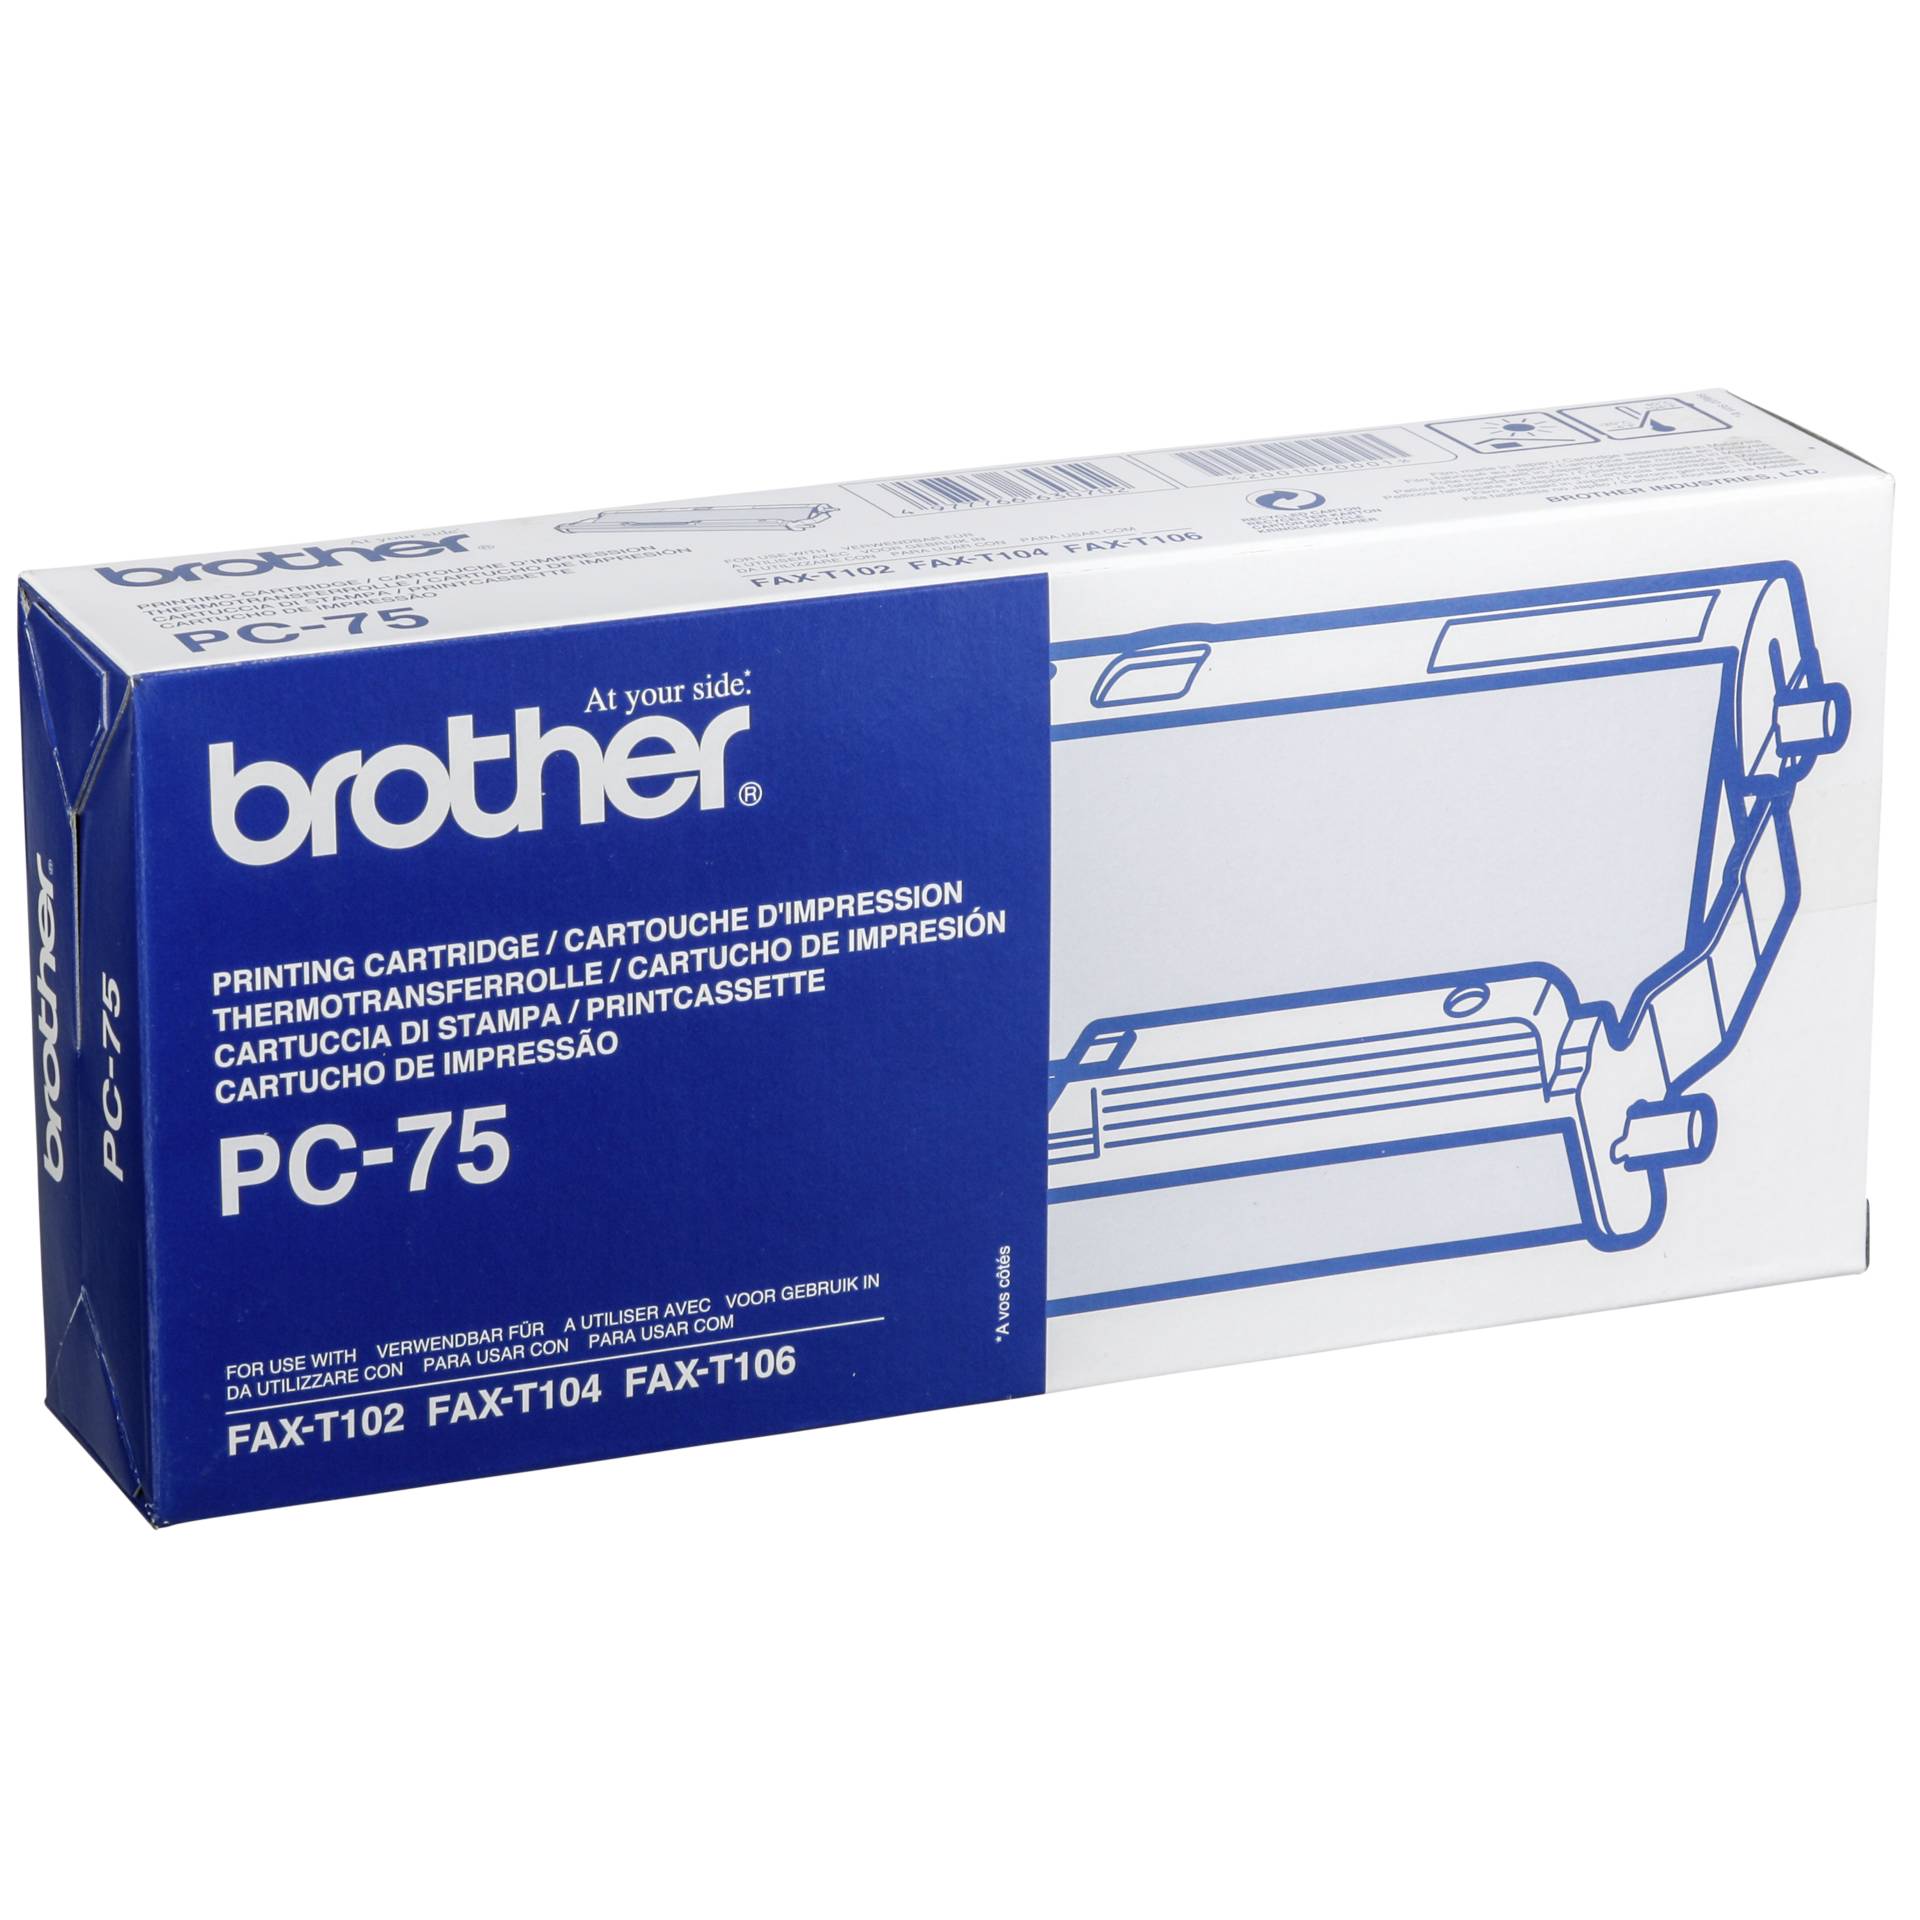 Brother PC-75 Thermotransferrolle 144 Seiten